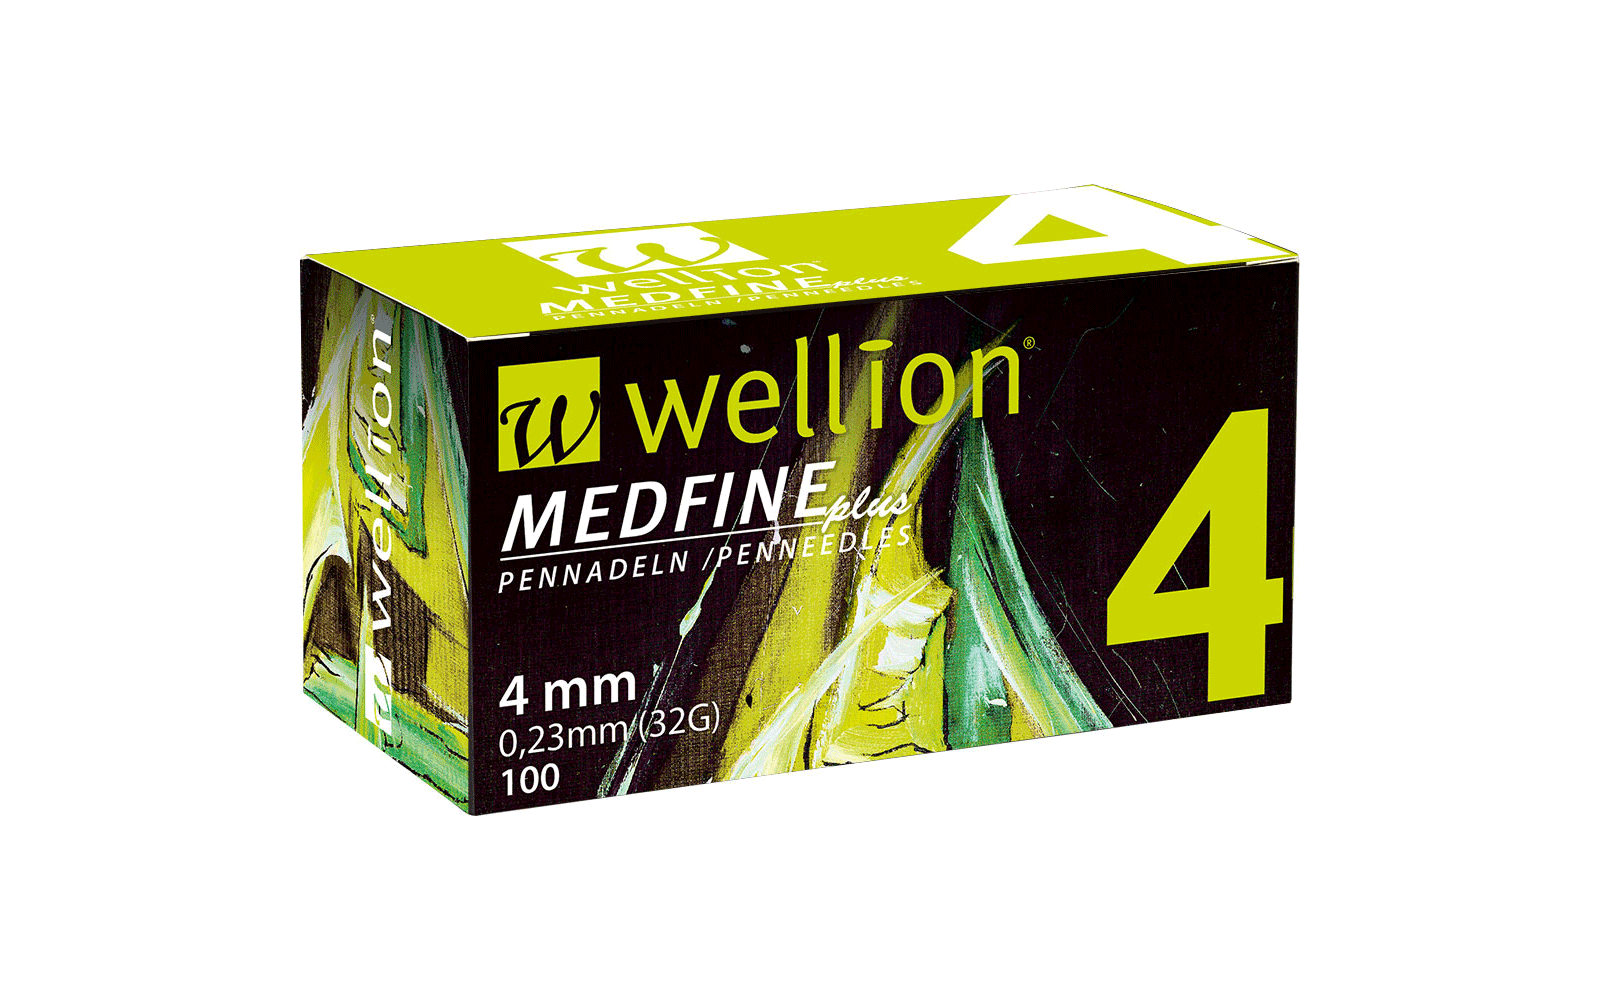 WELL104 Wellion MEDFINE plus Pennadeln, 4 mm, 100 Stück